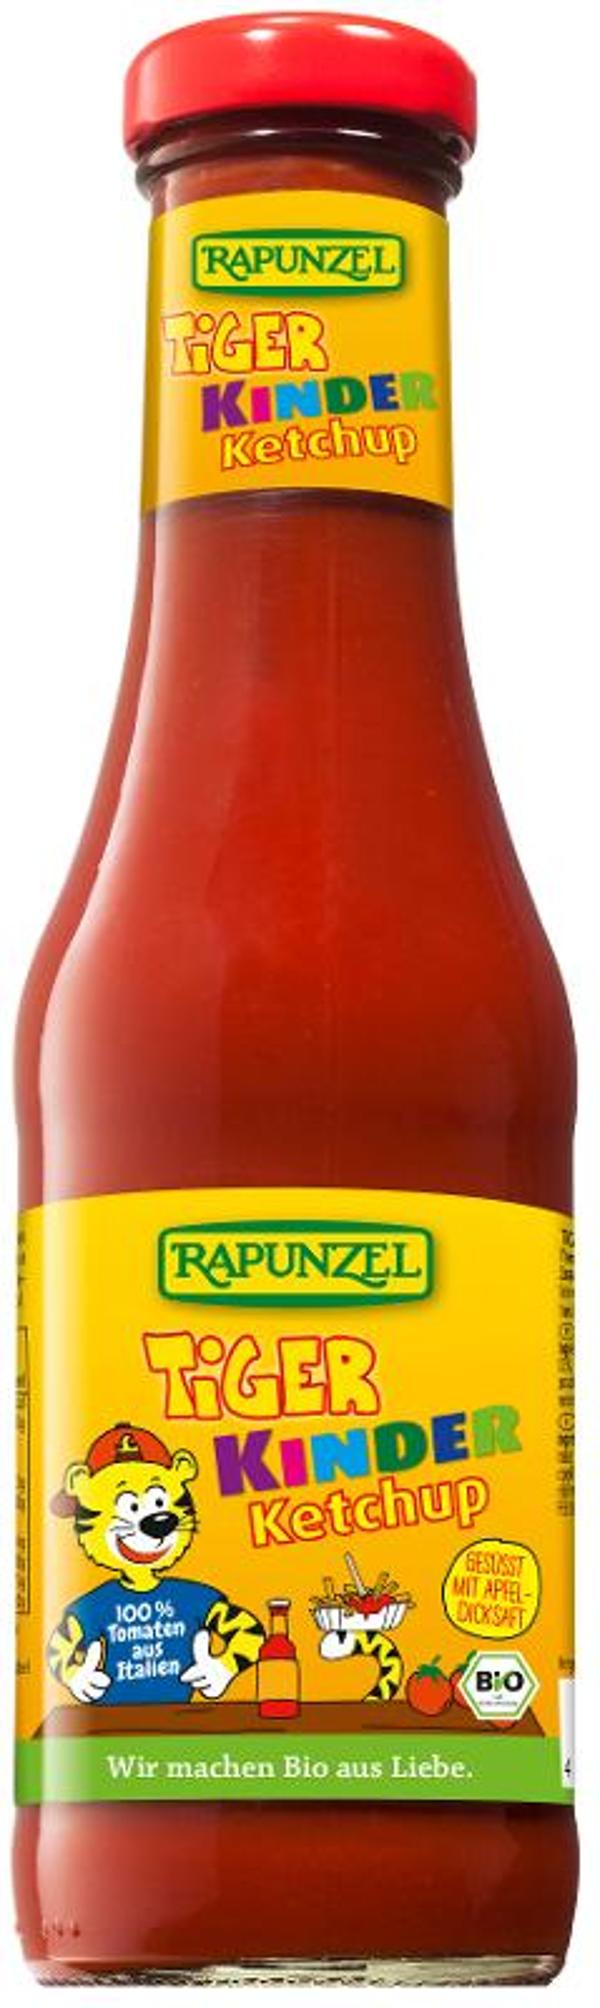 Produktfoto zu Kinder-Ketchup Rapunzel